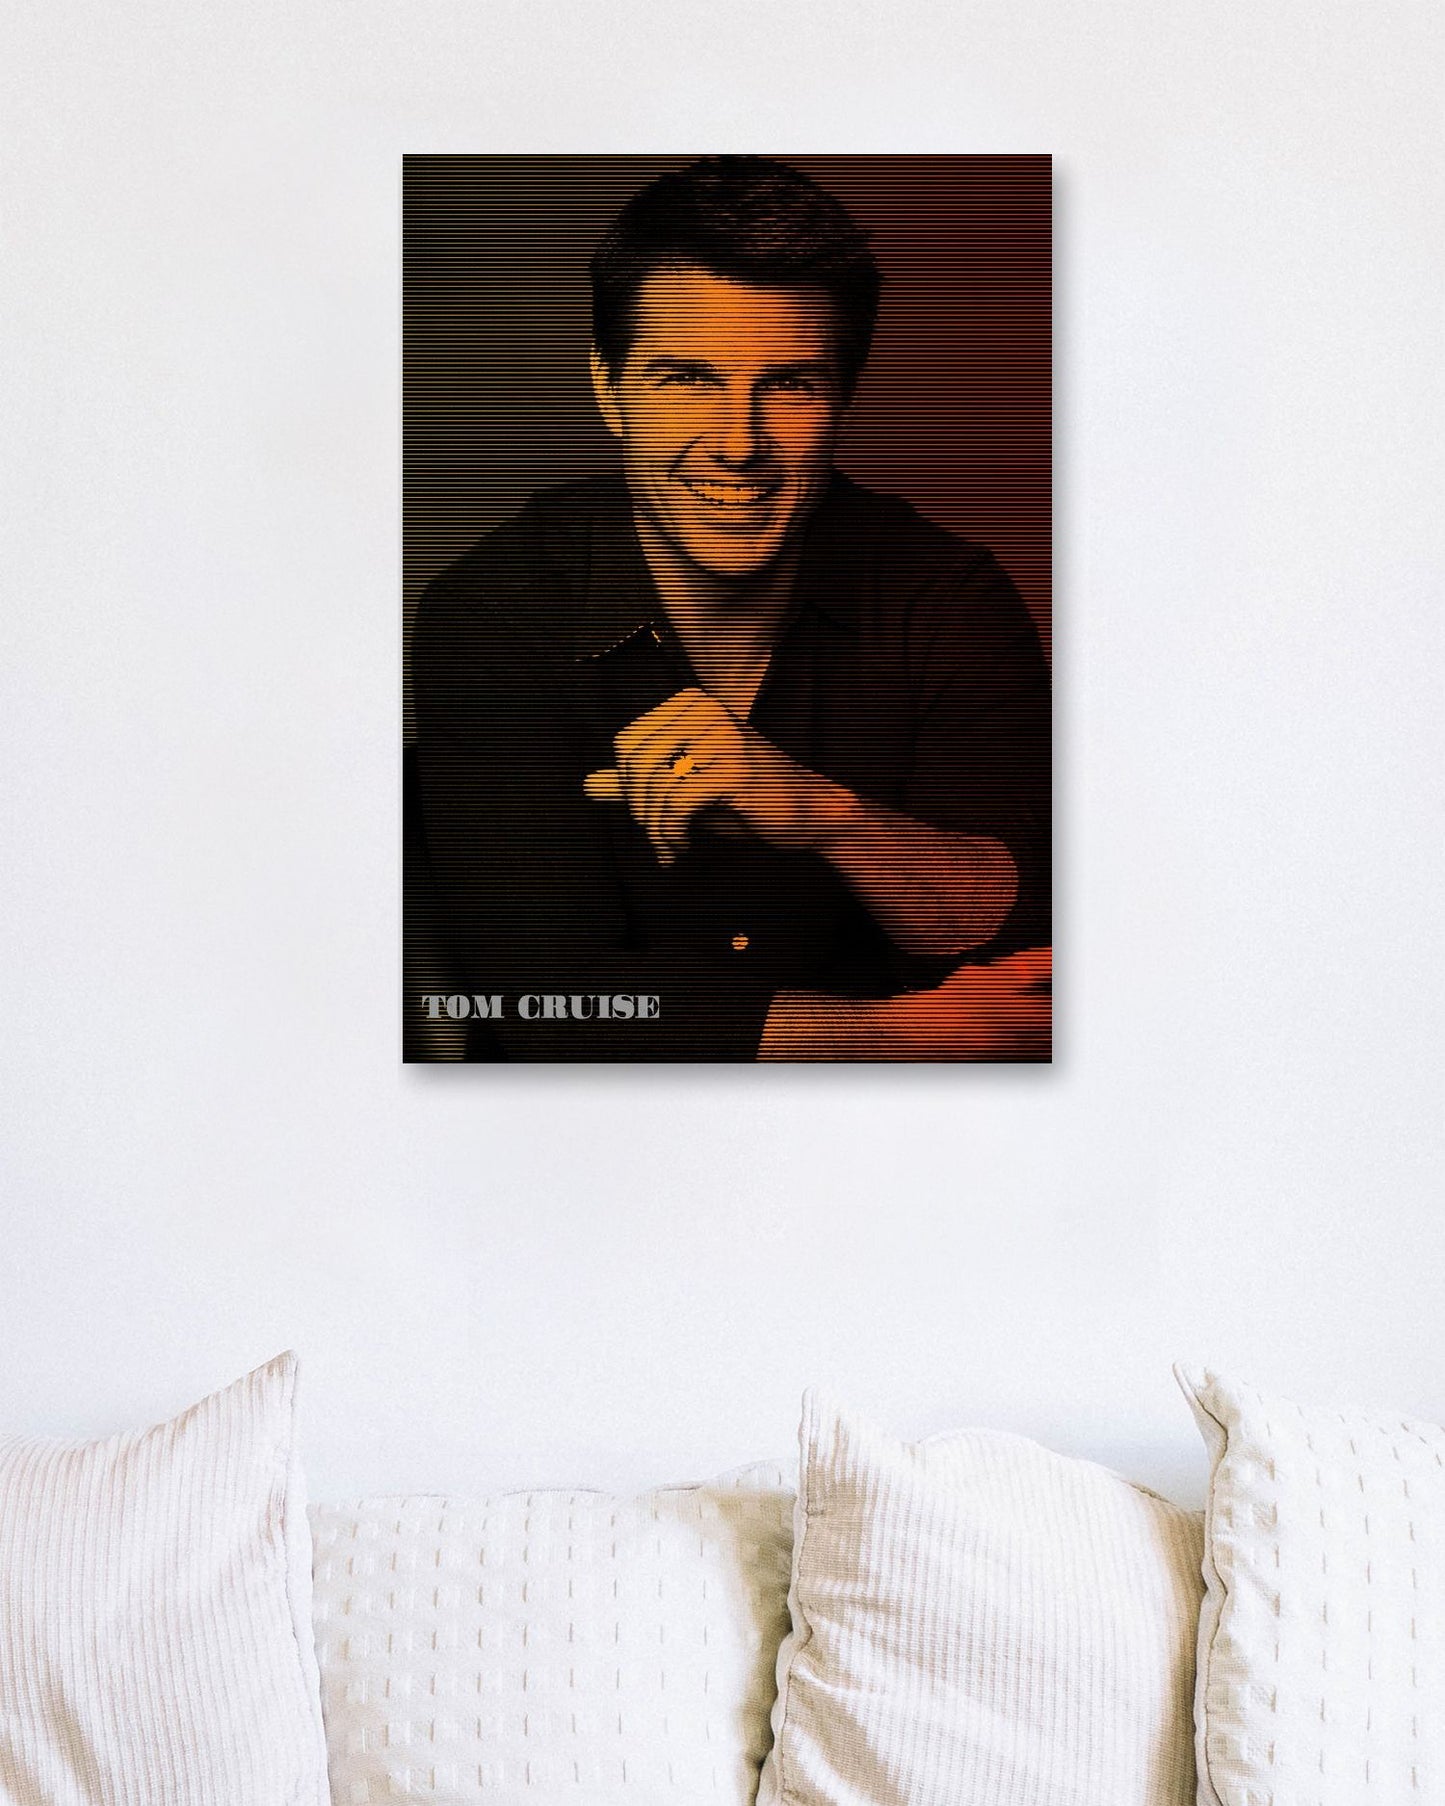 Tom Cruise - @MovieArt